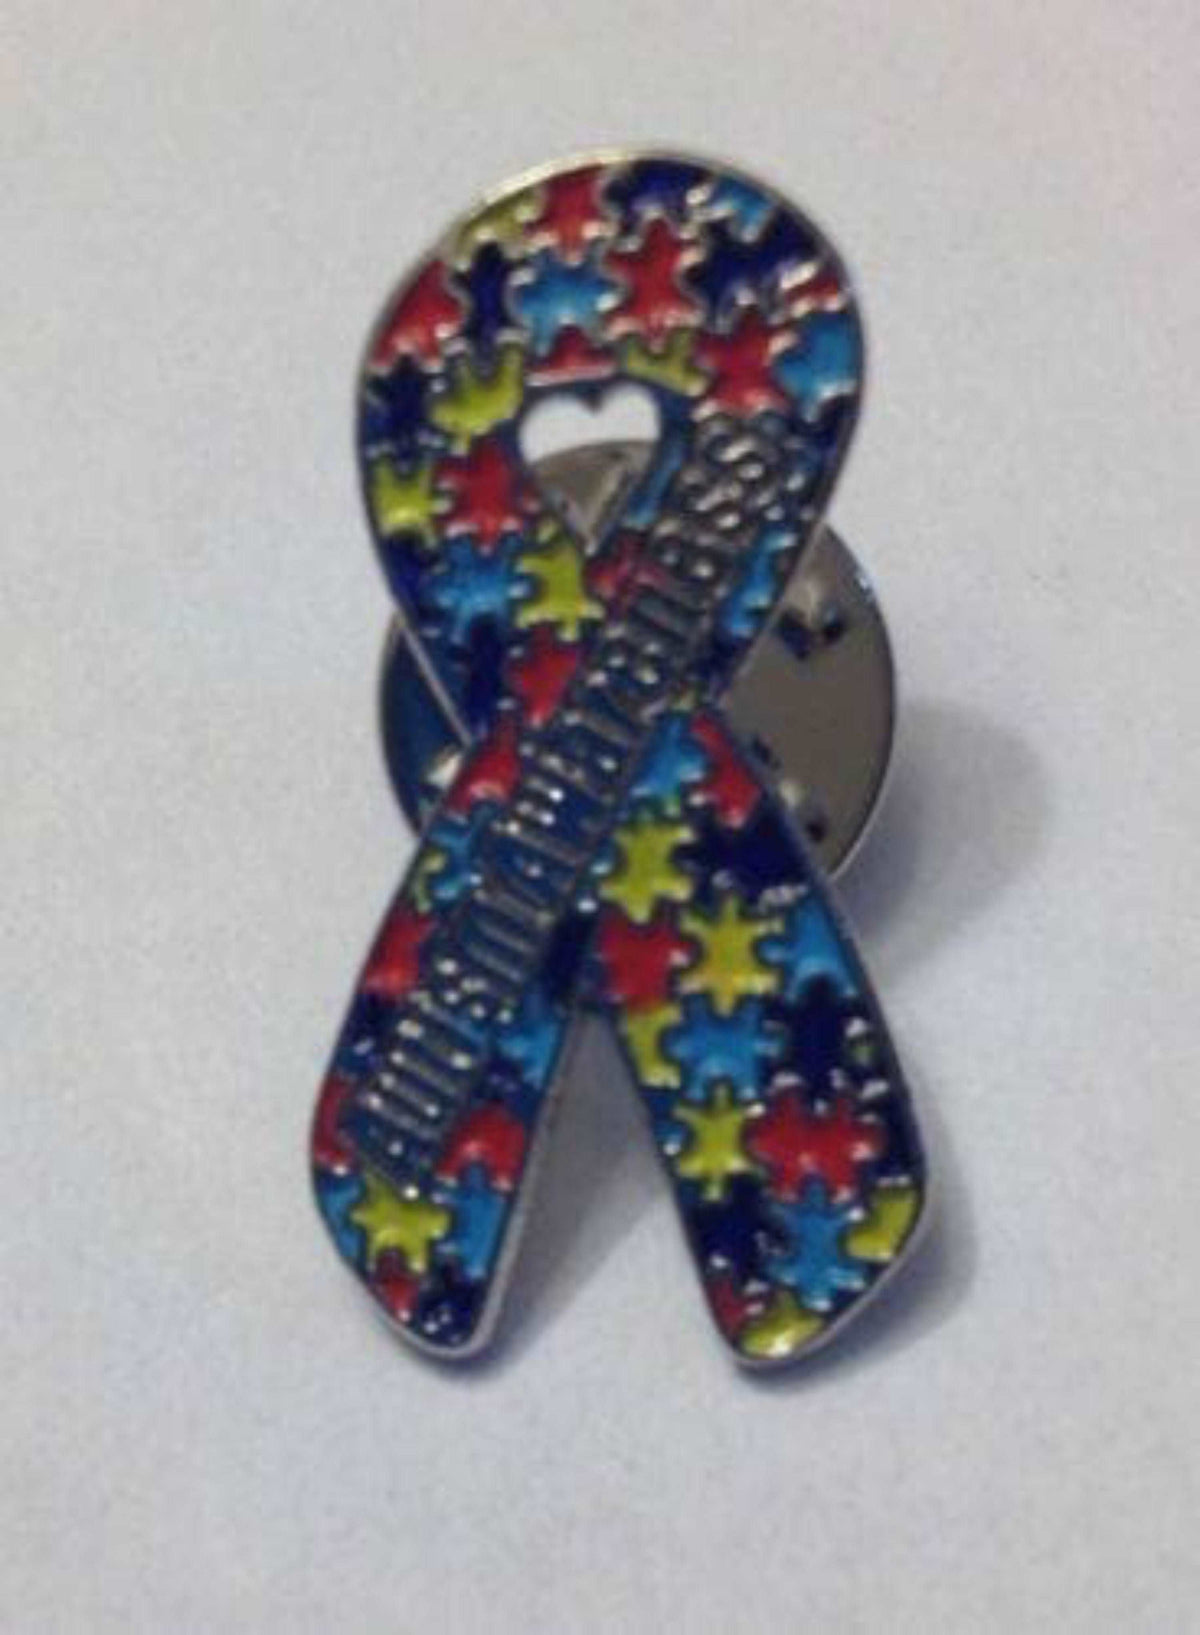 Aspergers Awareness Puzzle Pin with Words Autism Awareness - The House of Awareness